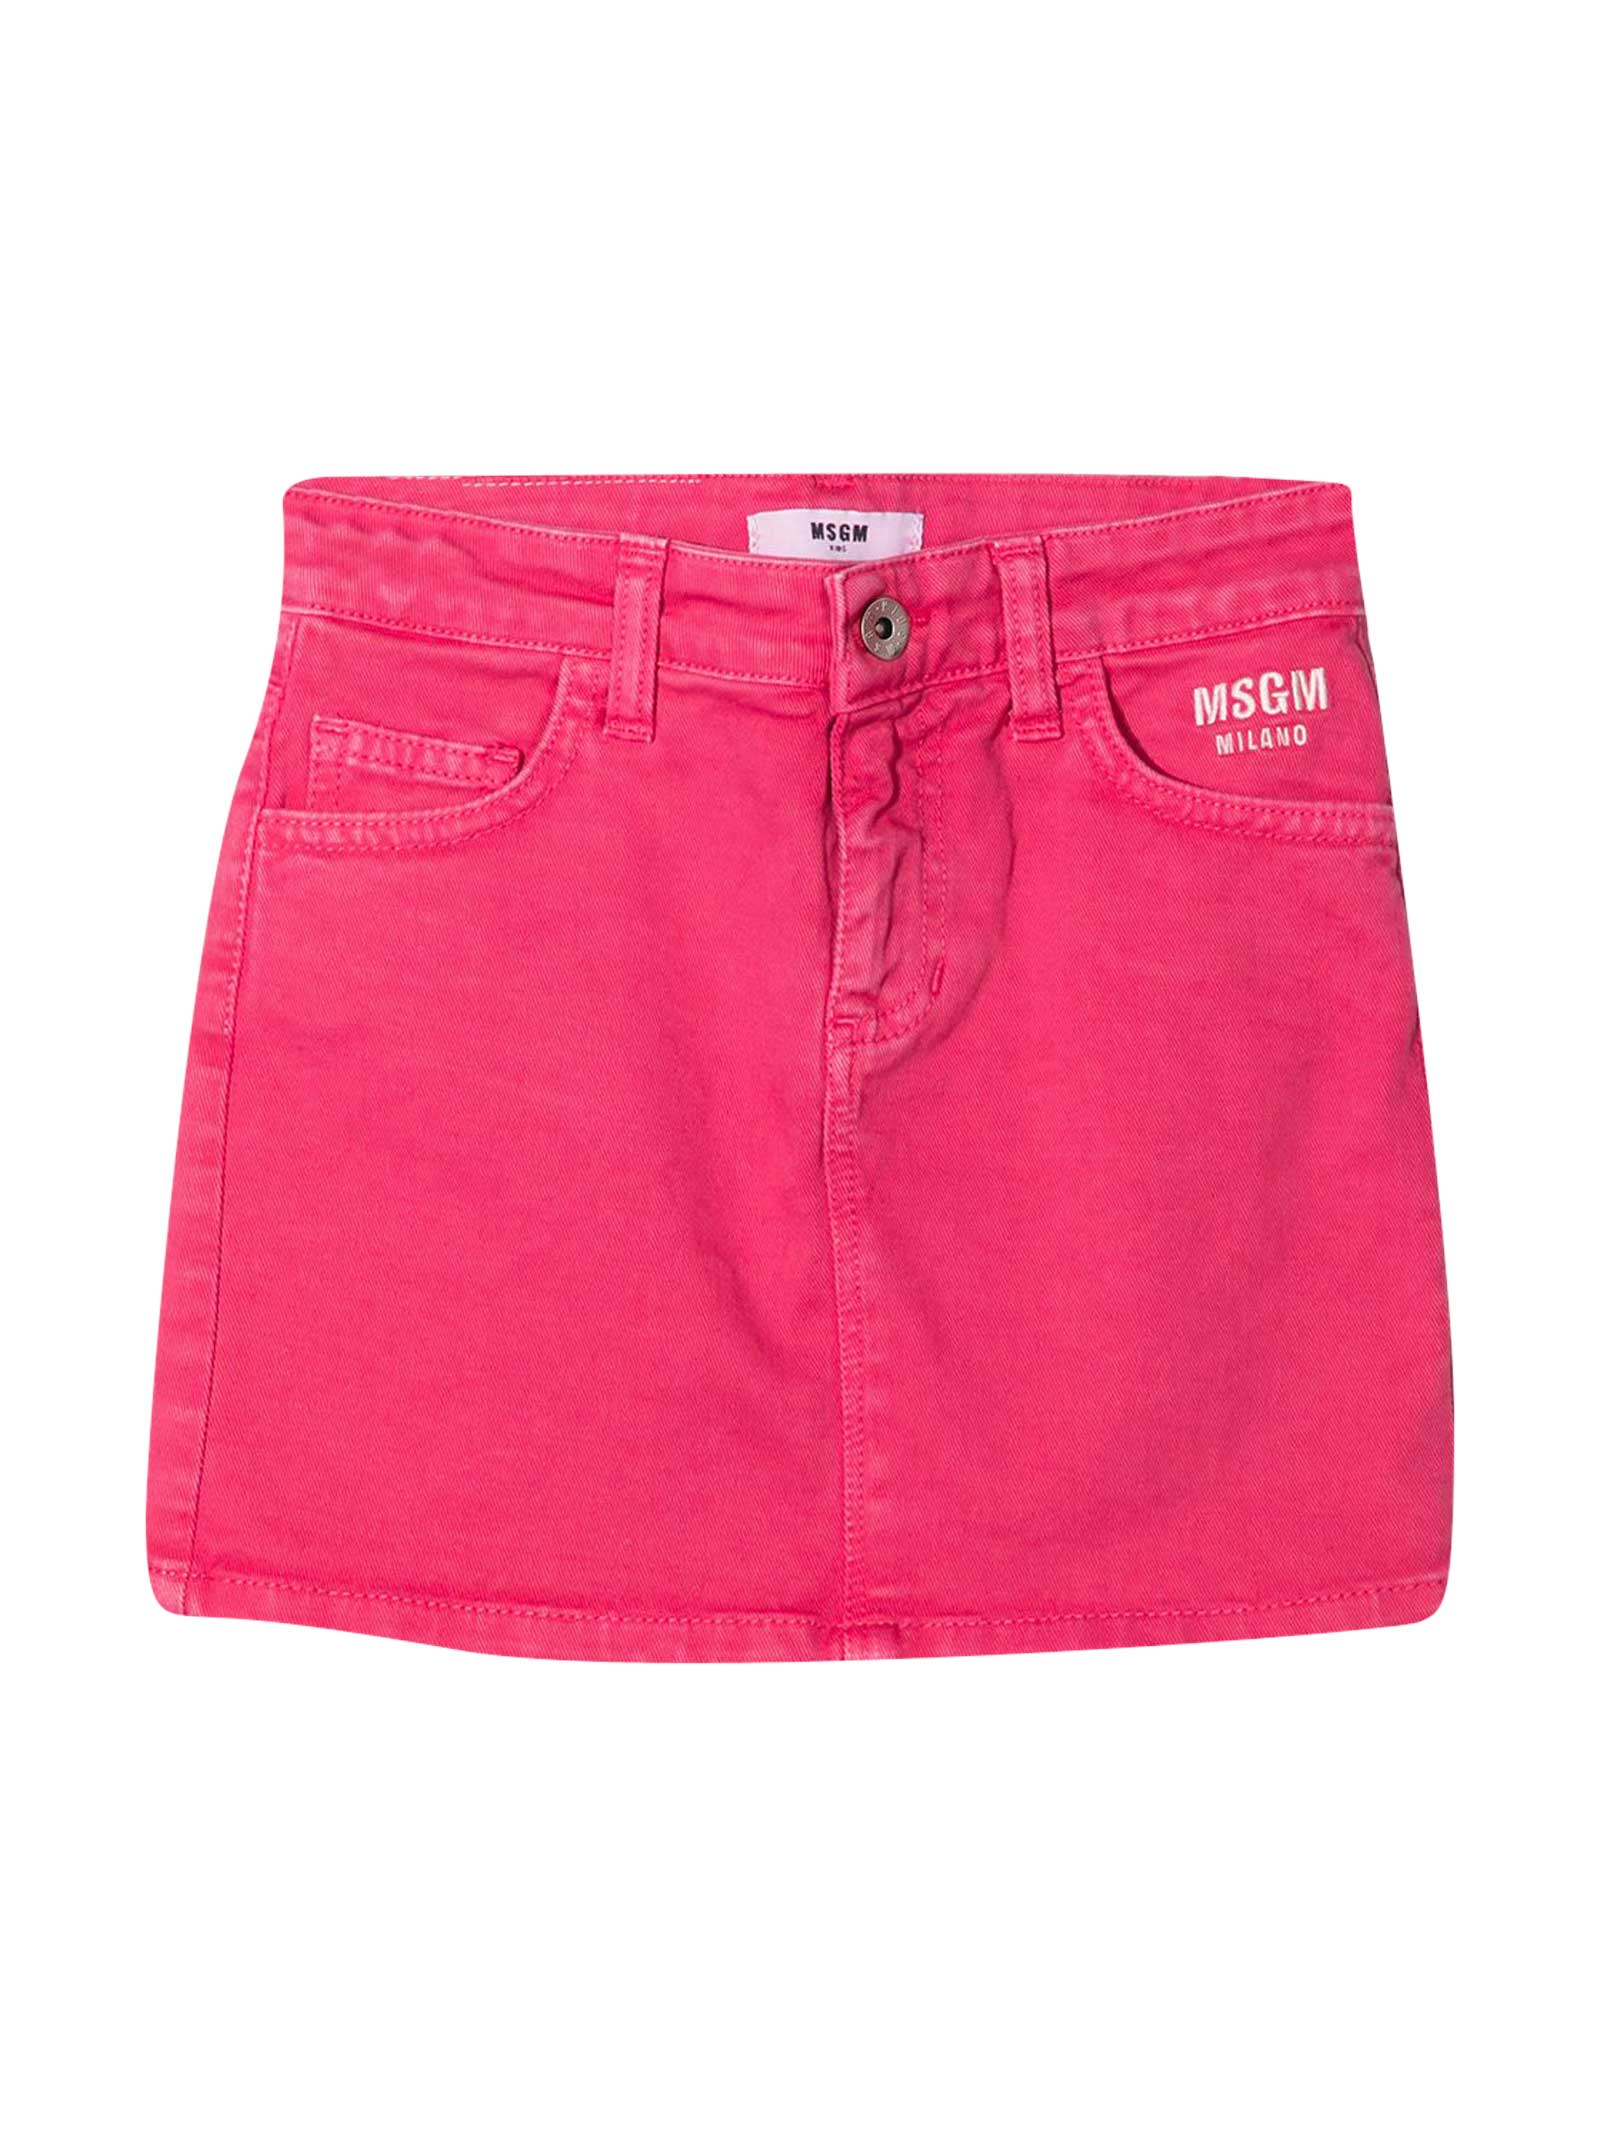 MSGM Pink Teen Denim Skirt